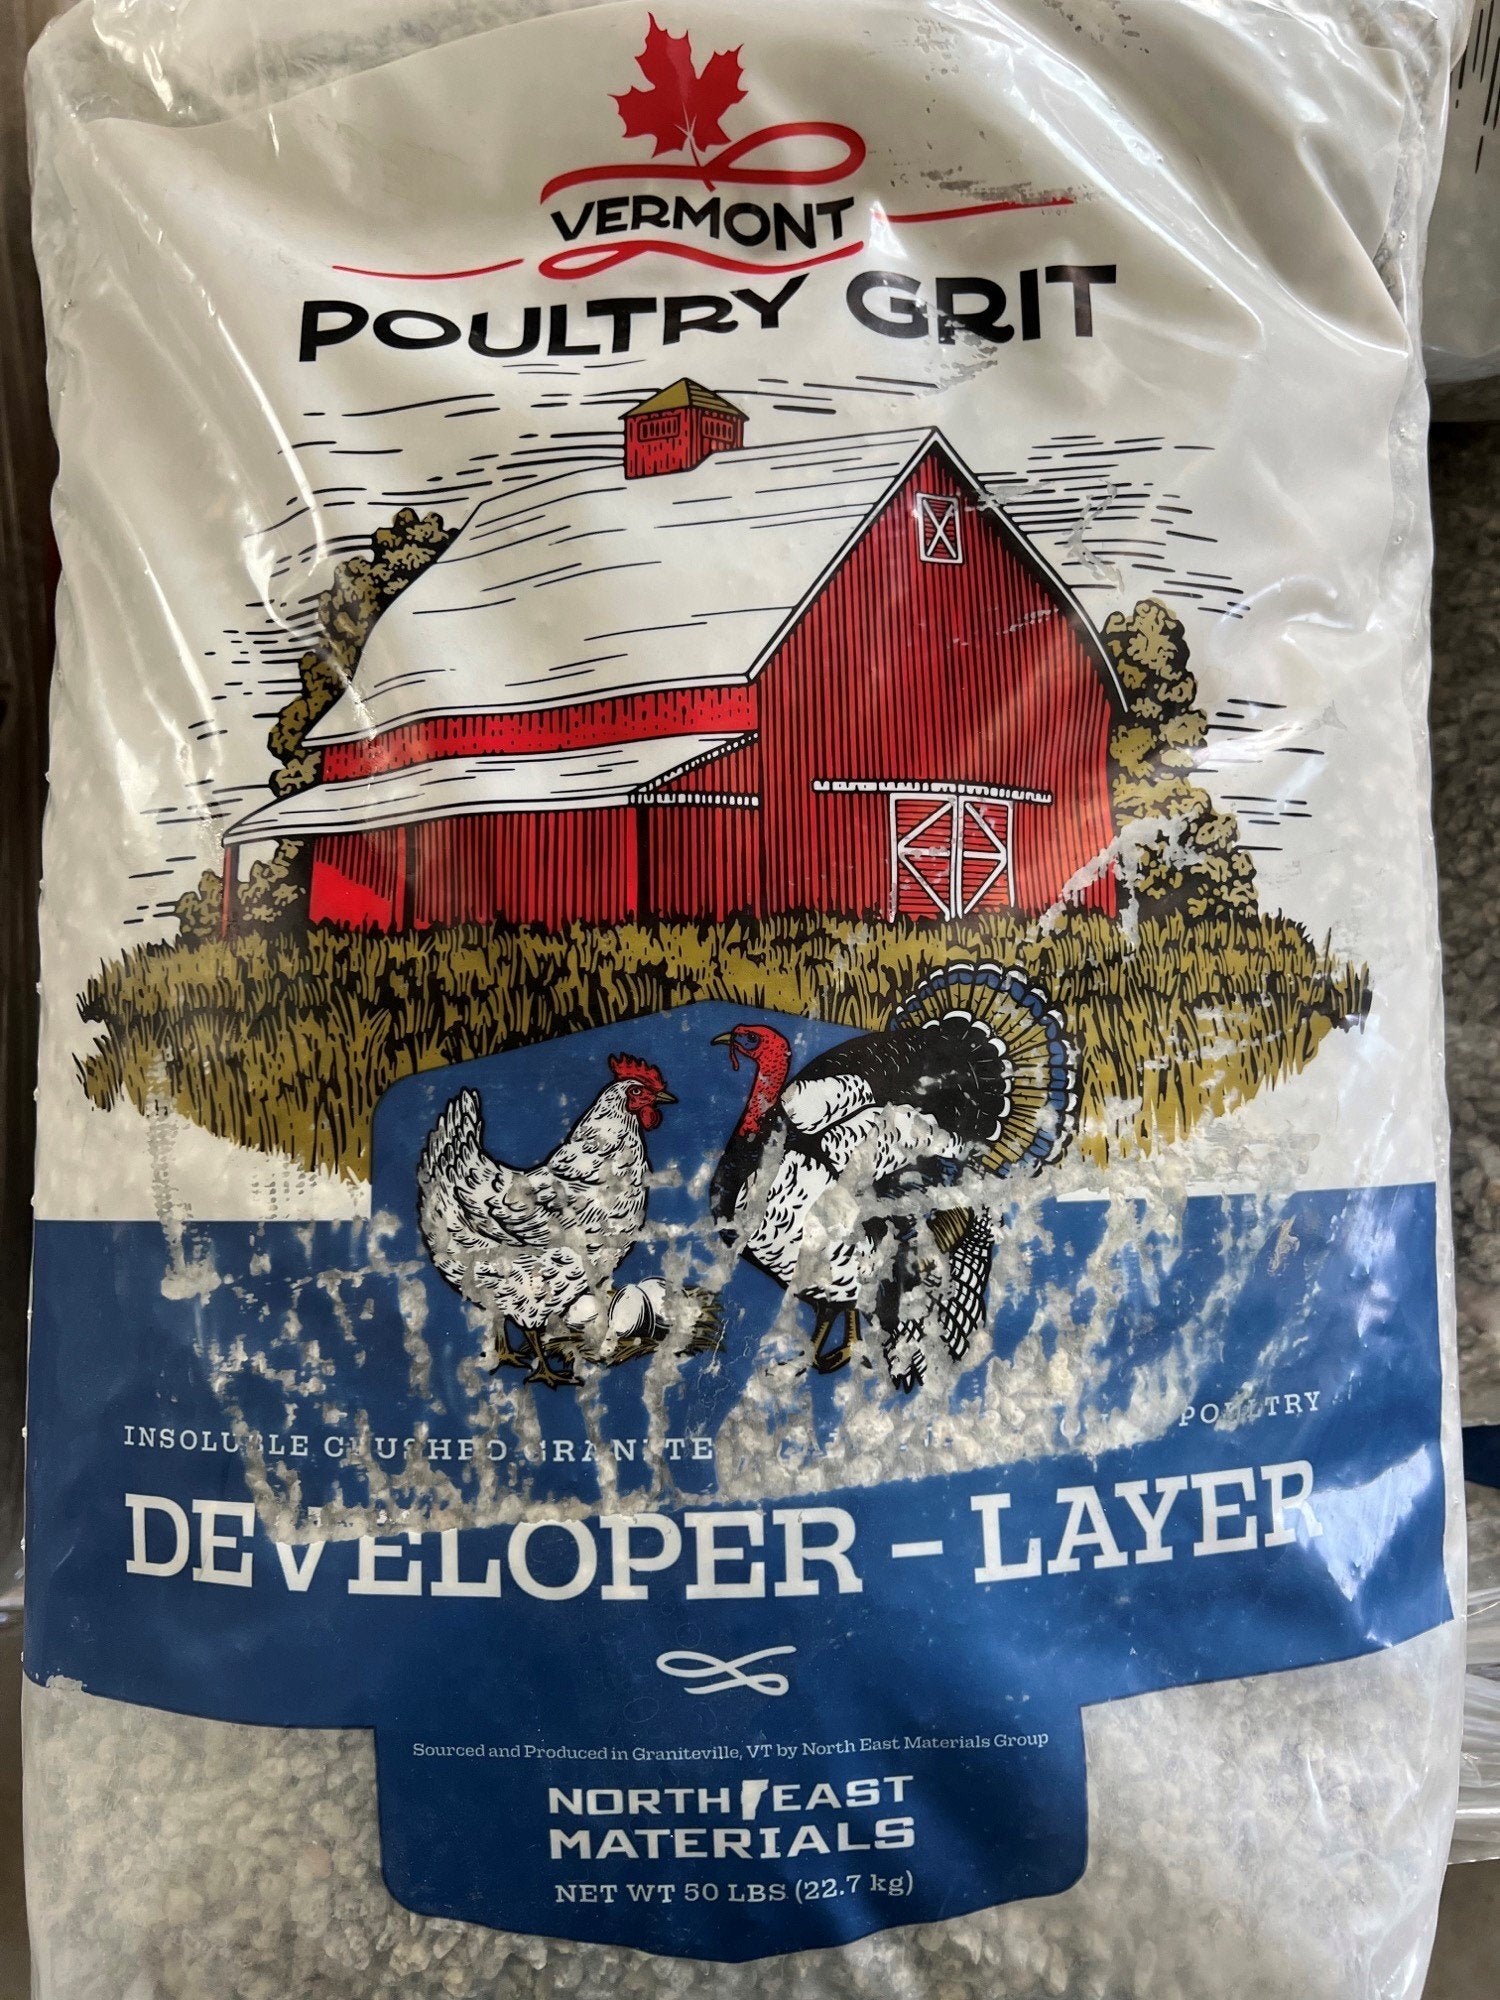 Vermont Poultry Grit - Developer / Layer